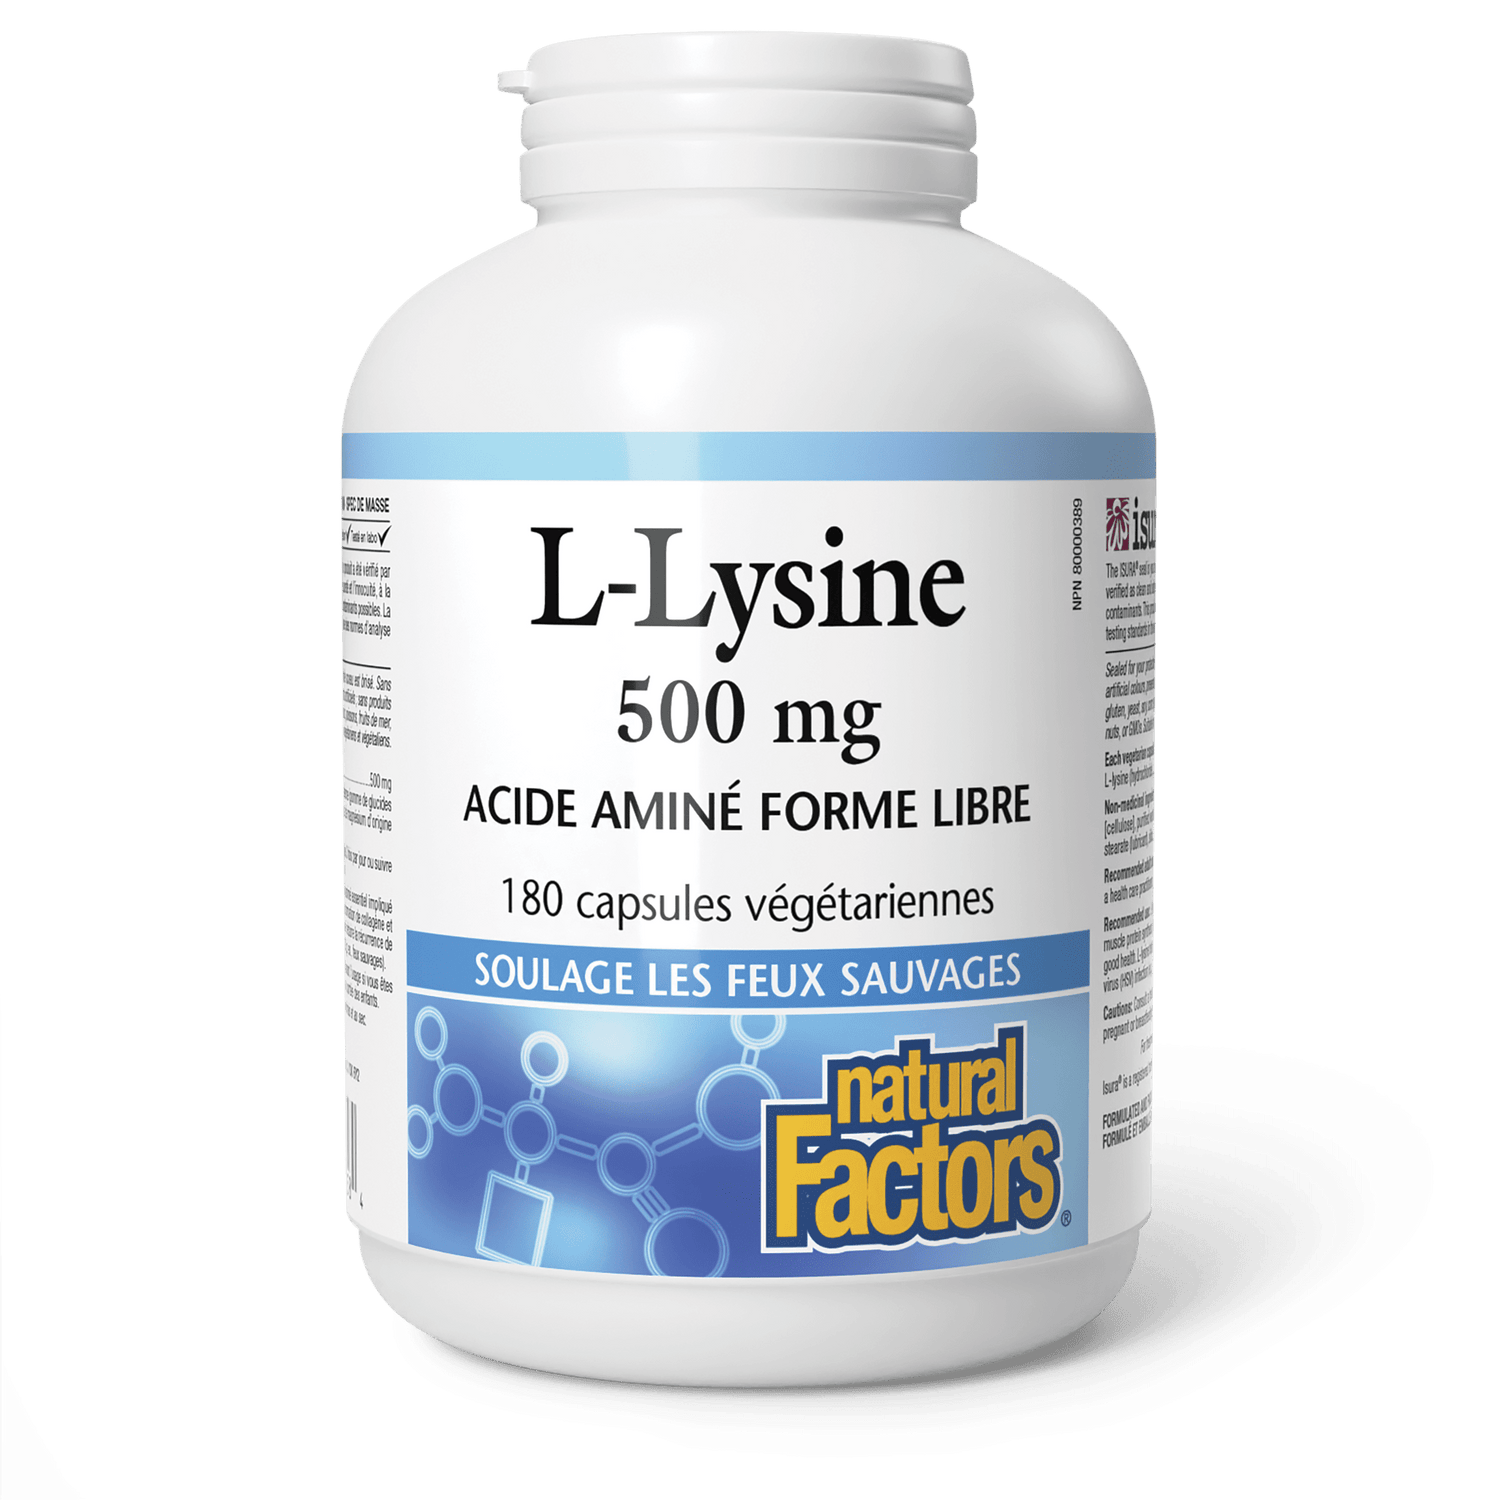 L-Lysine 500 mg, Natural Factors|v|image|2858